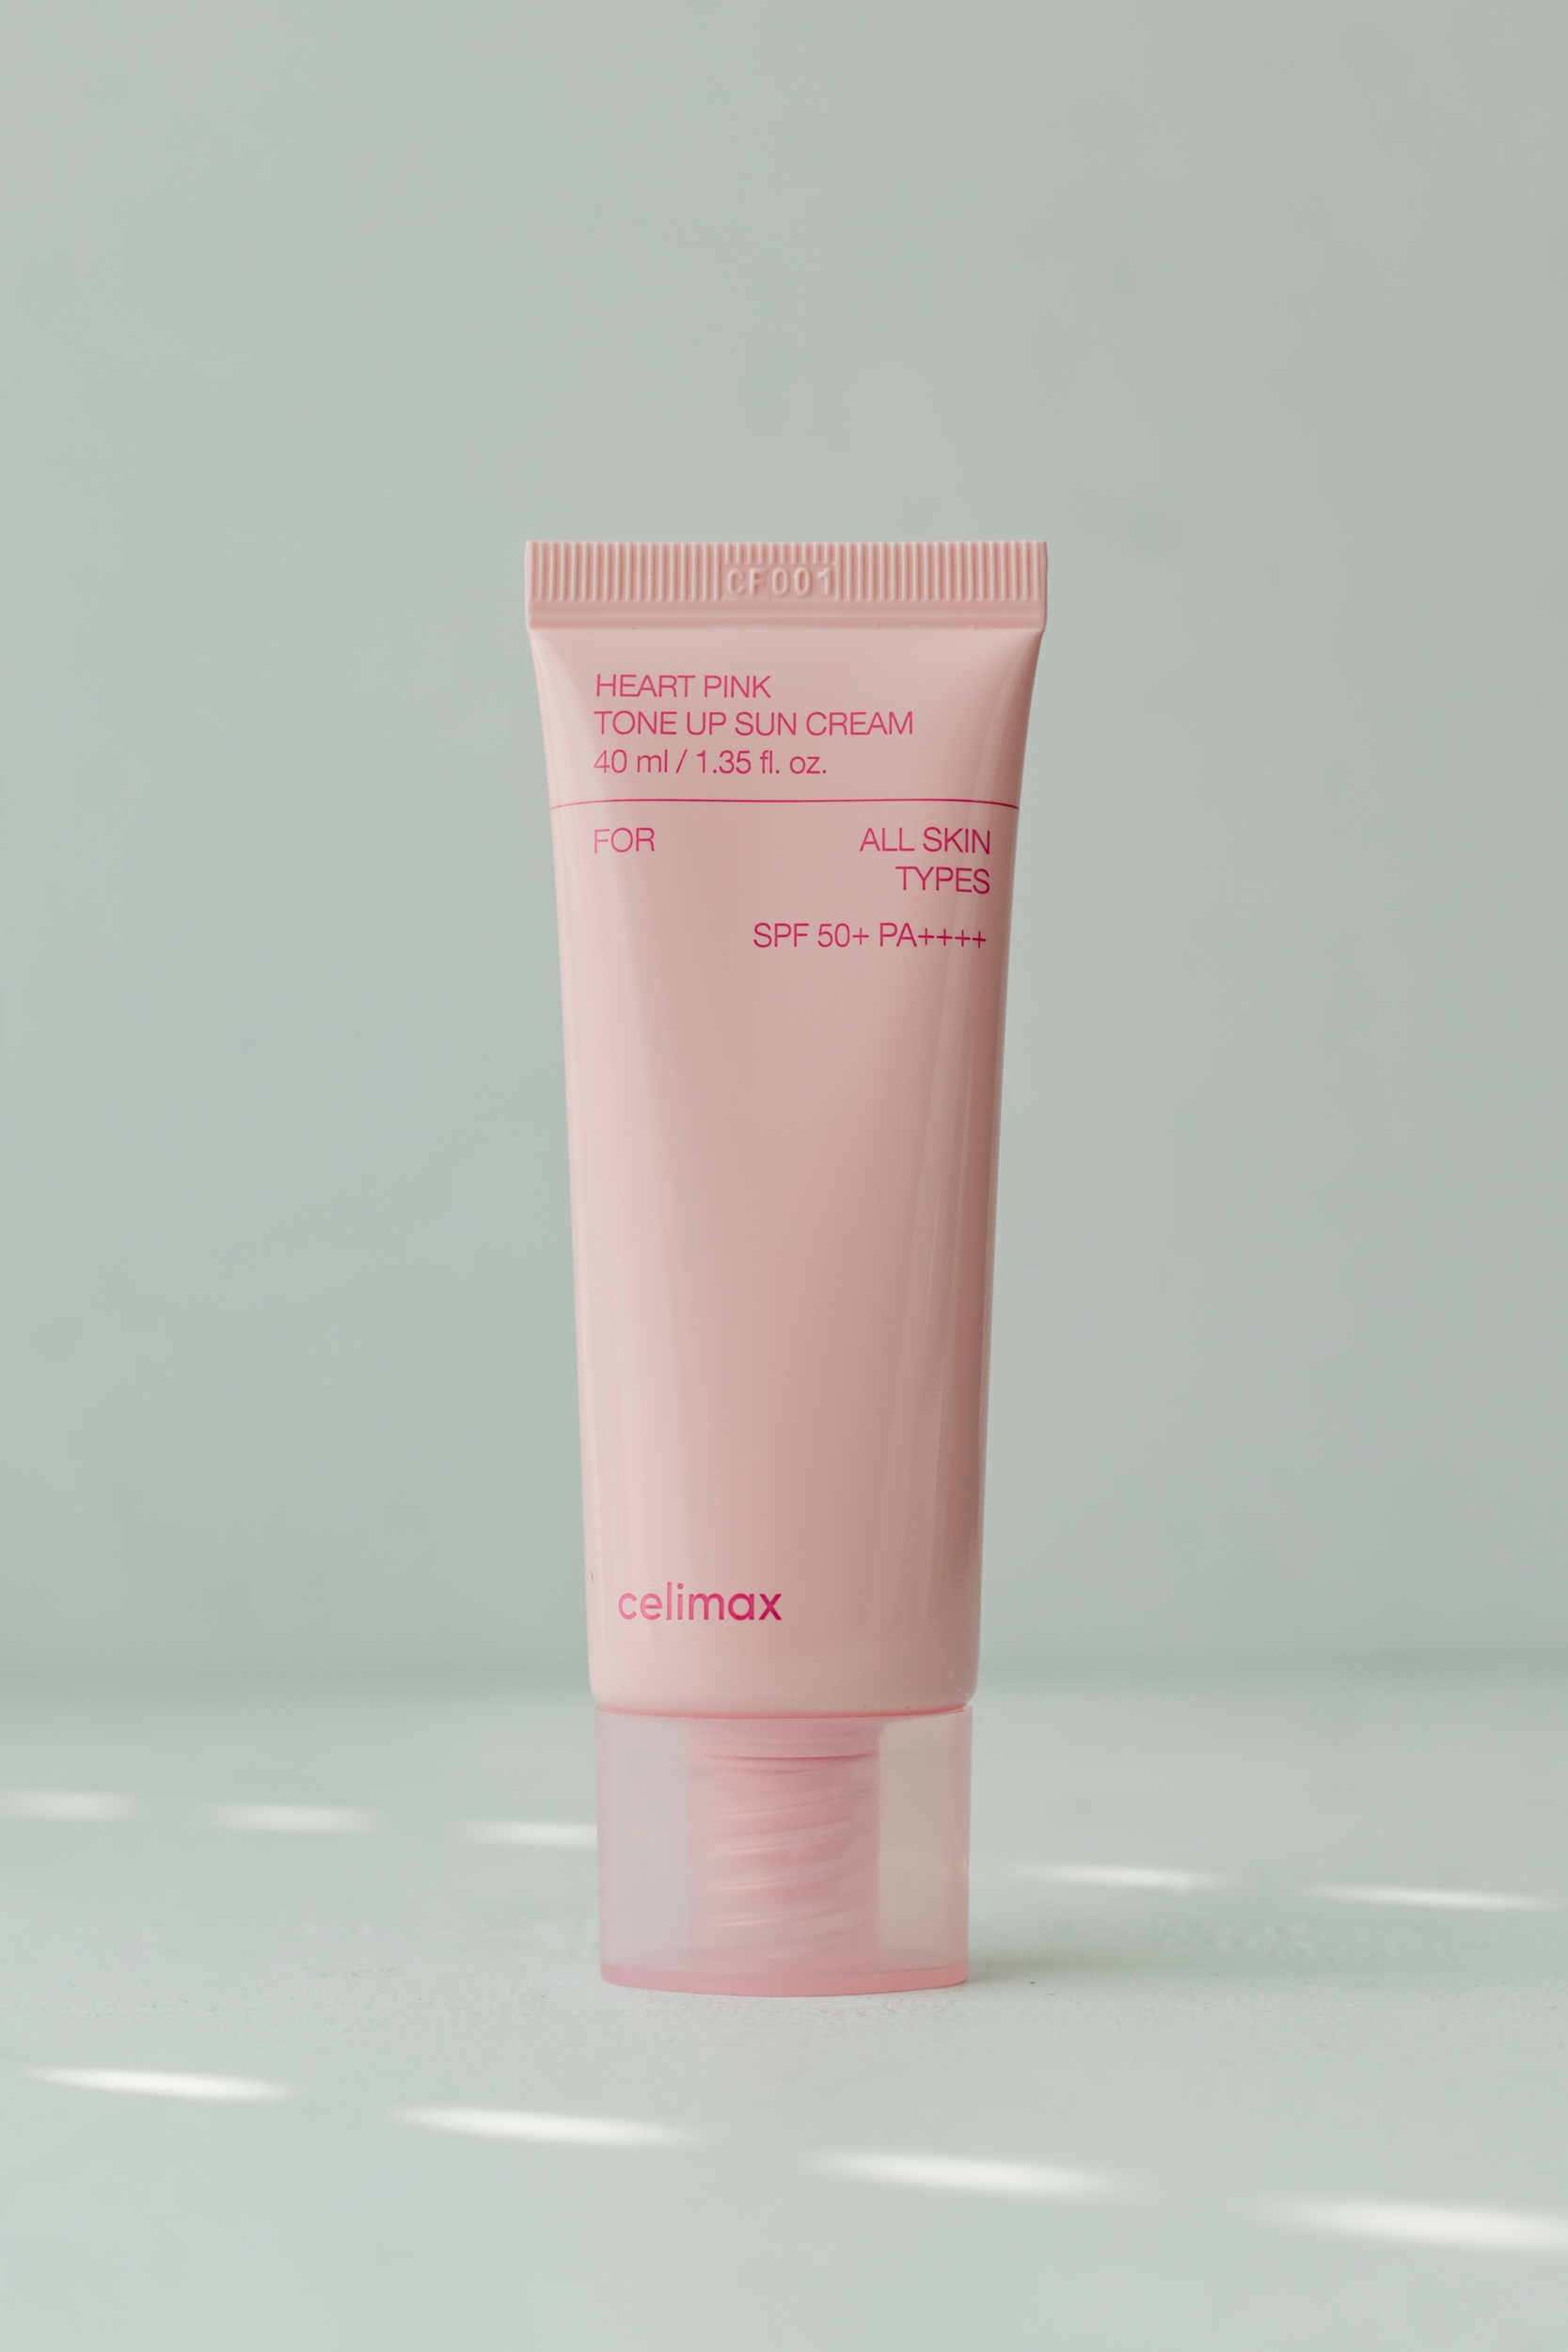 Cолнцезащитный крем, выравнивающий тон кожи Celimax Heart Pink Tone Up Sun Cream SPF50+ PA++++ 40ml - фото 1